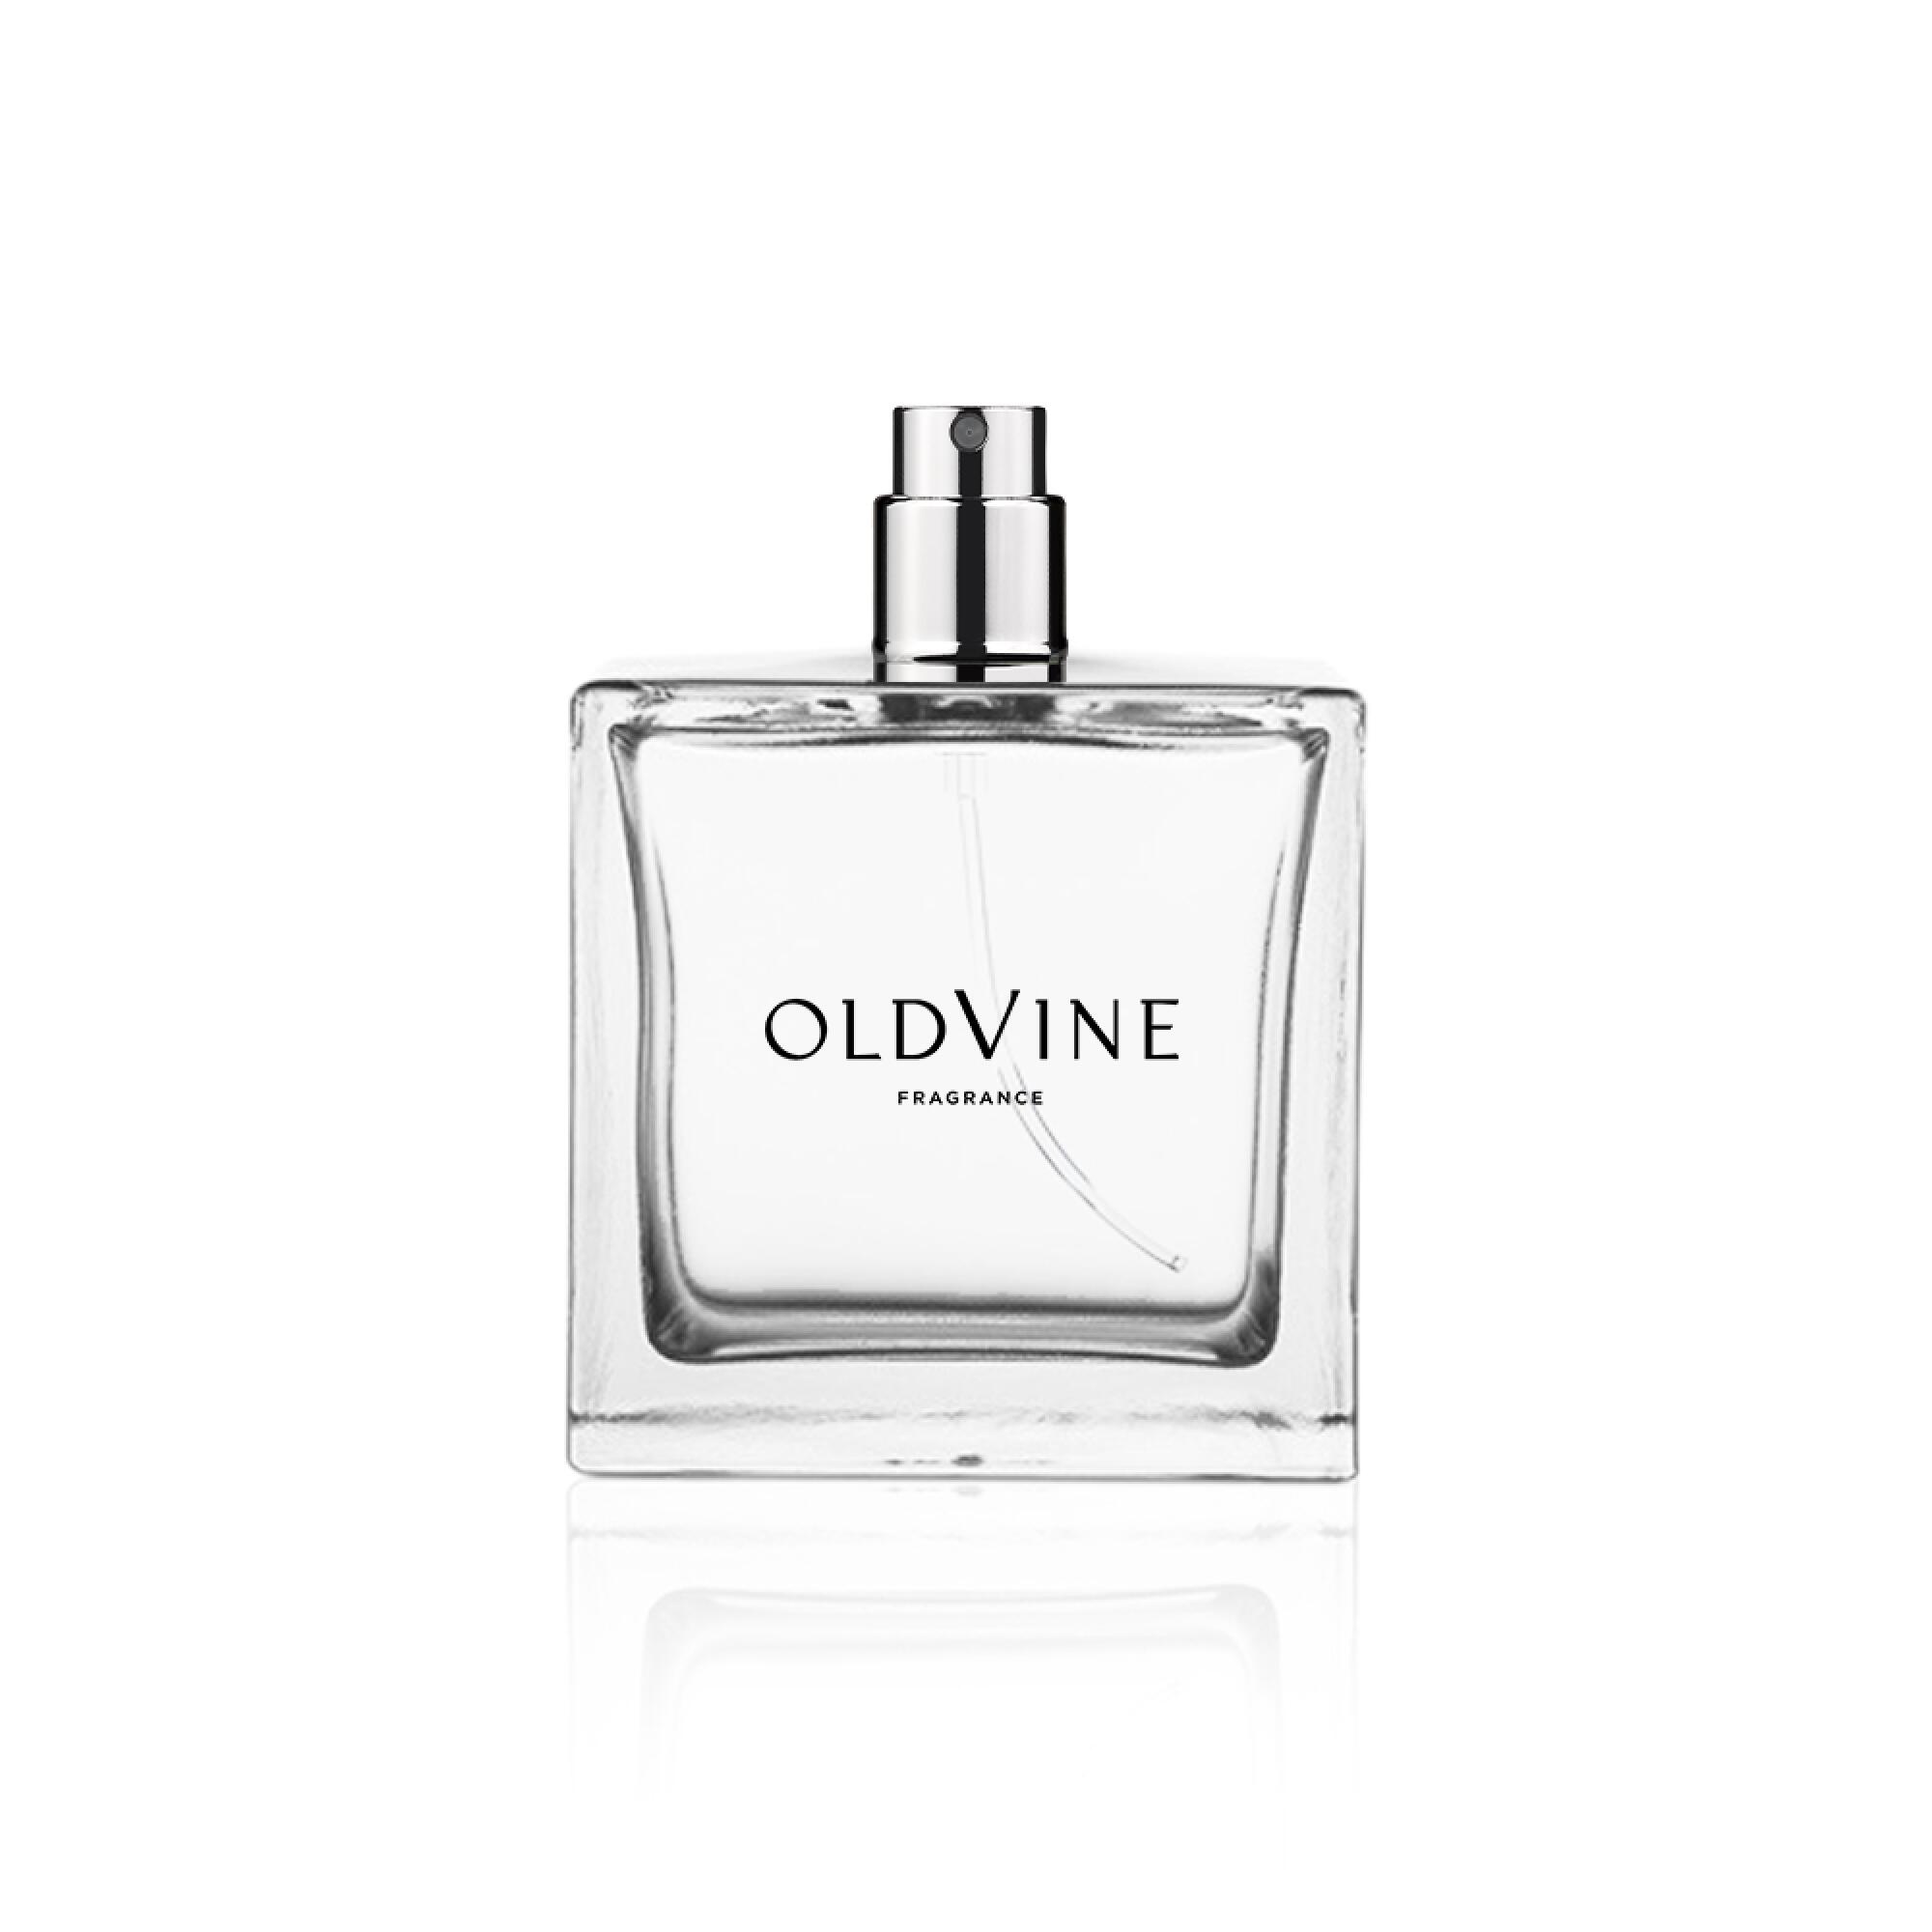 Oldvine Fragrance, Meadow Bloom eau de parfum, 100 milliliters, $230, oldvinefragrance.com